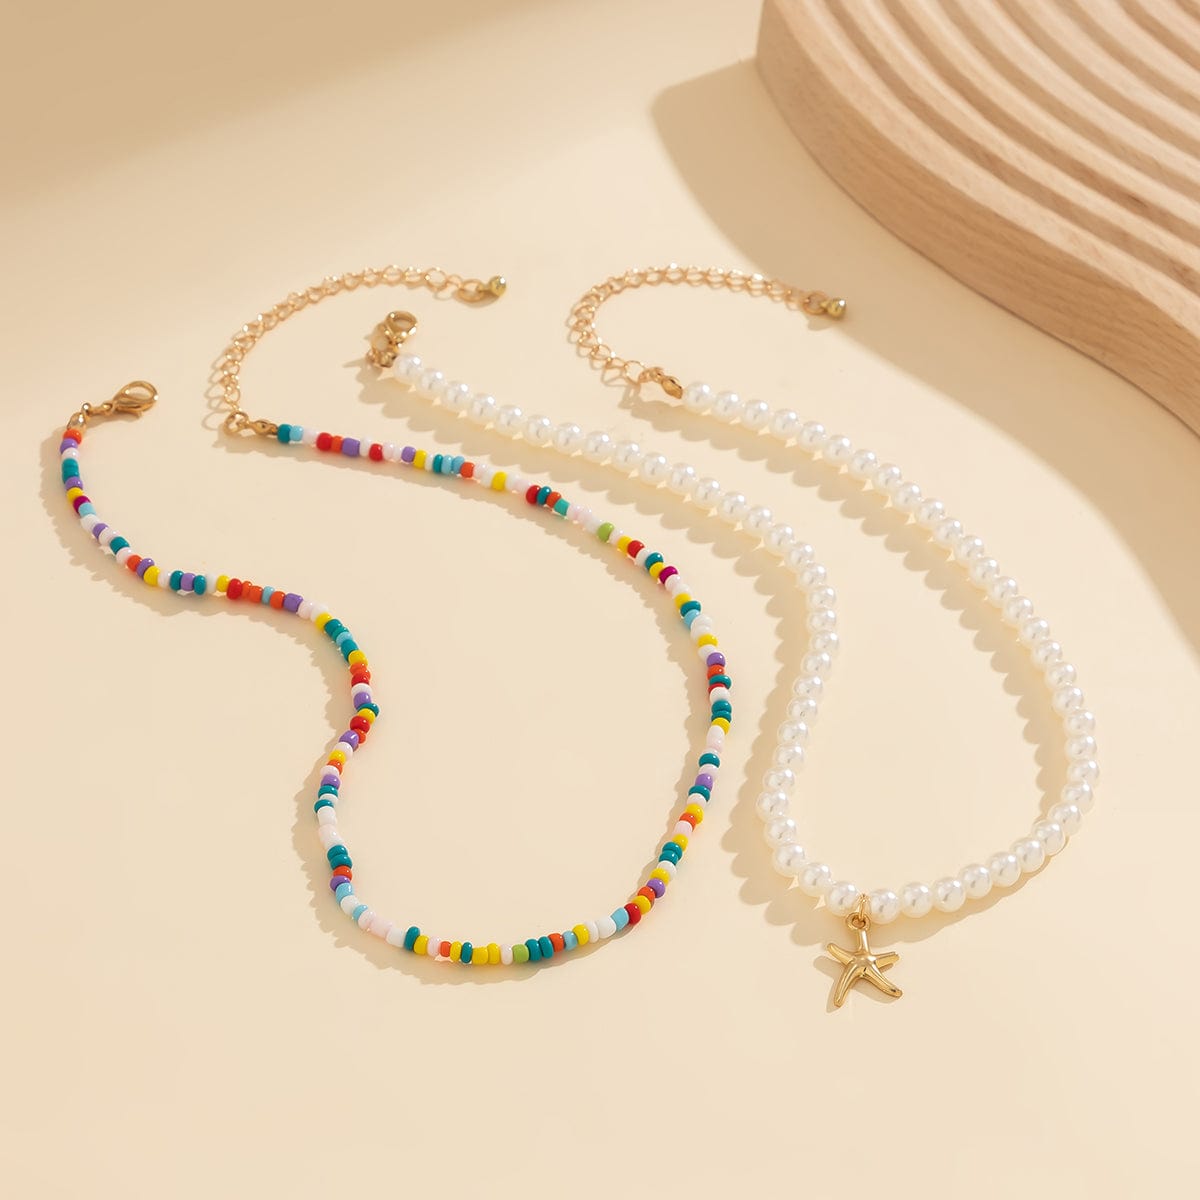 Boho Layered Seed Bead Starfish Pendant Pearl Chain Necklace Set - ArtGalleryZen